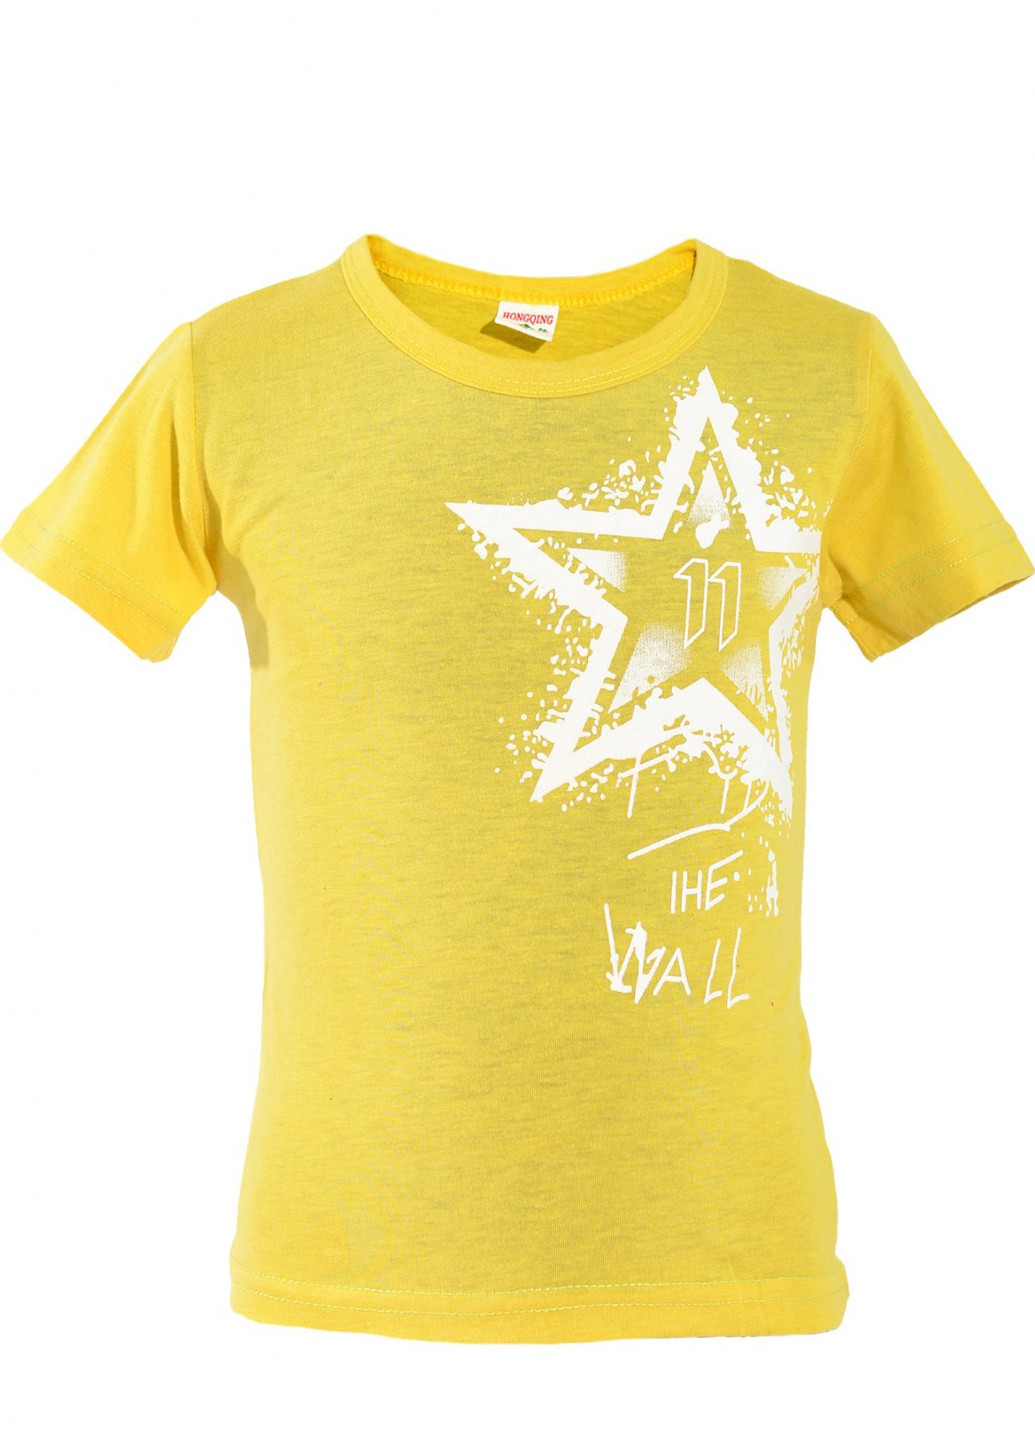 Желтая футболки футболка на дівчаток (звезда)16510-736 Lemanta